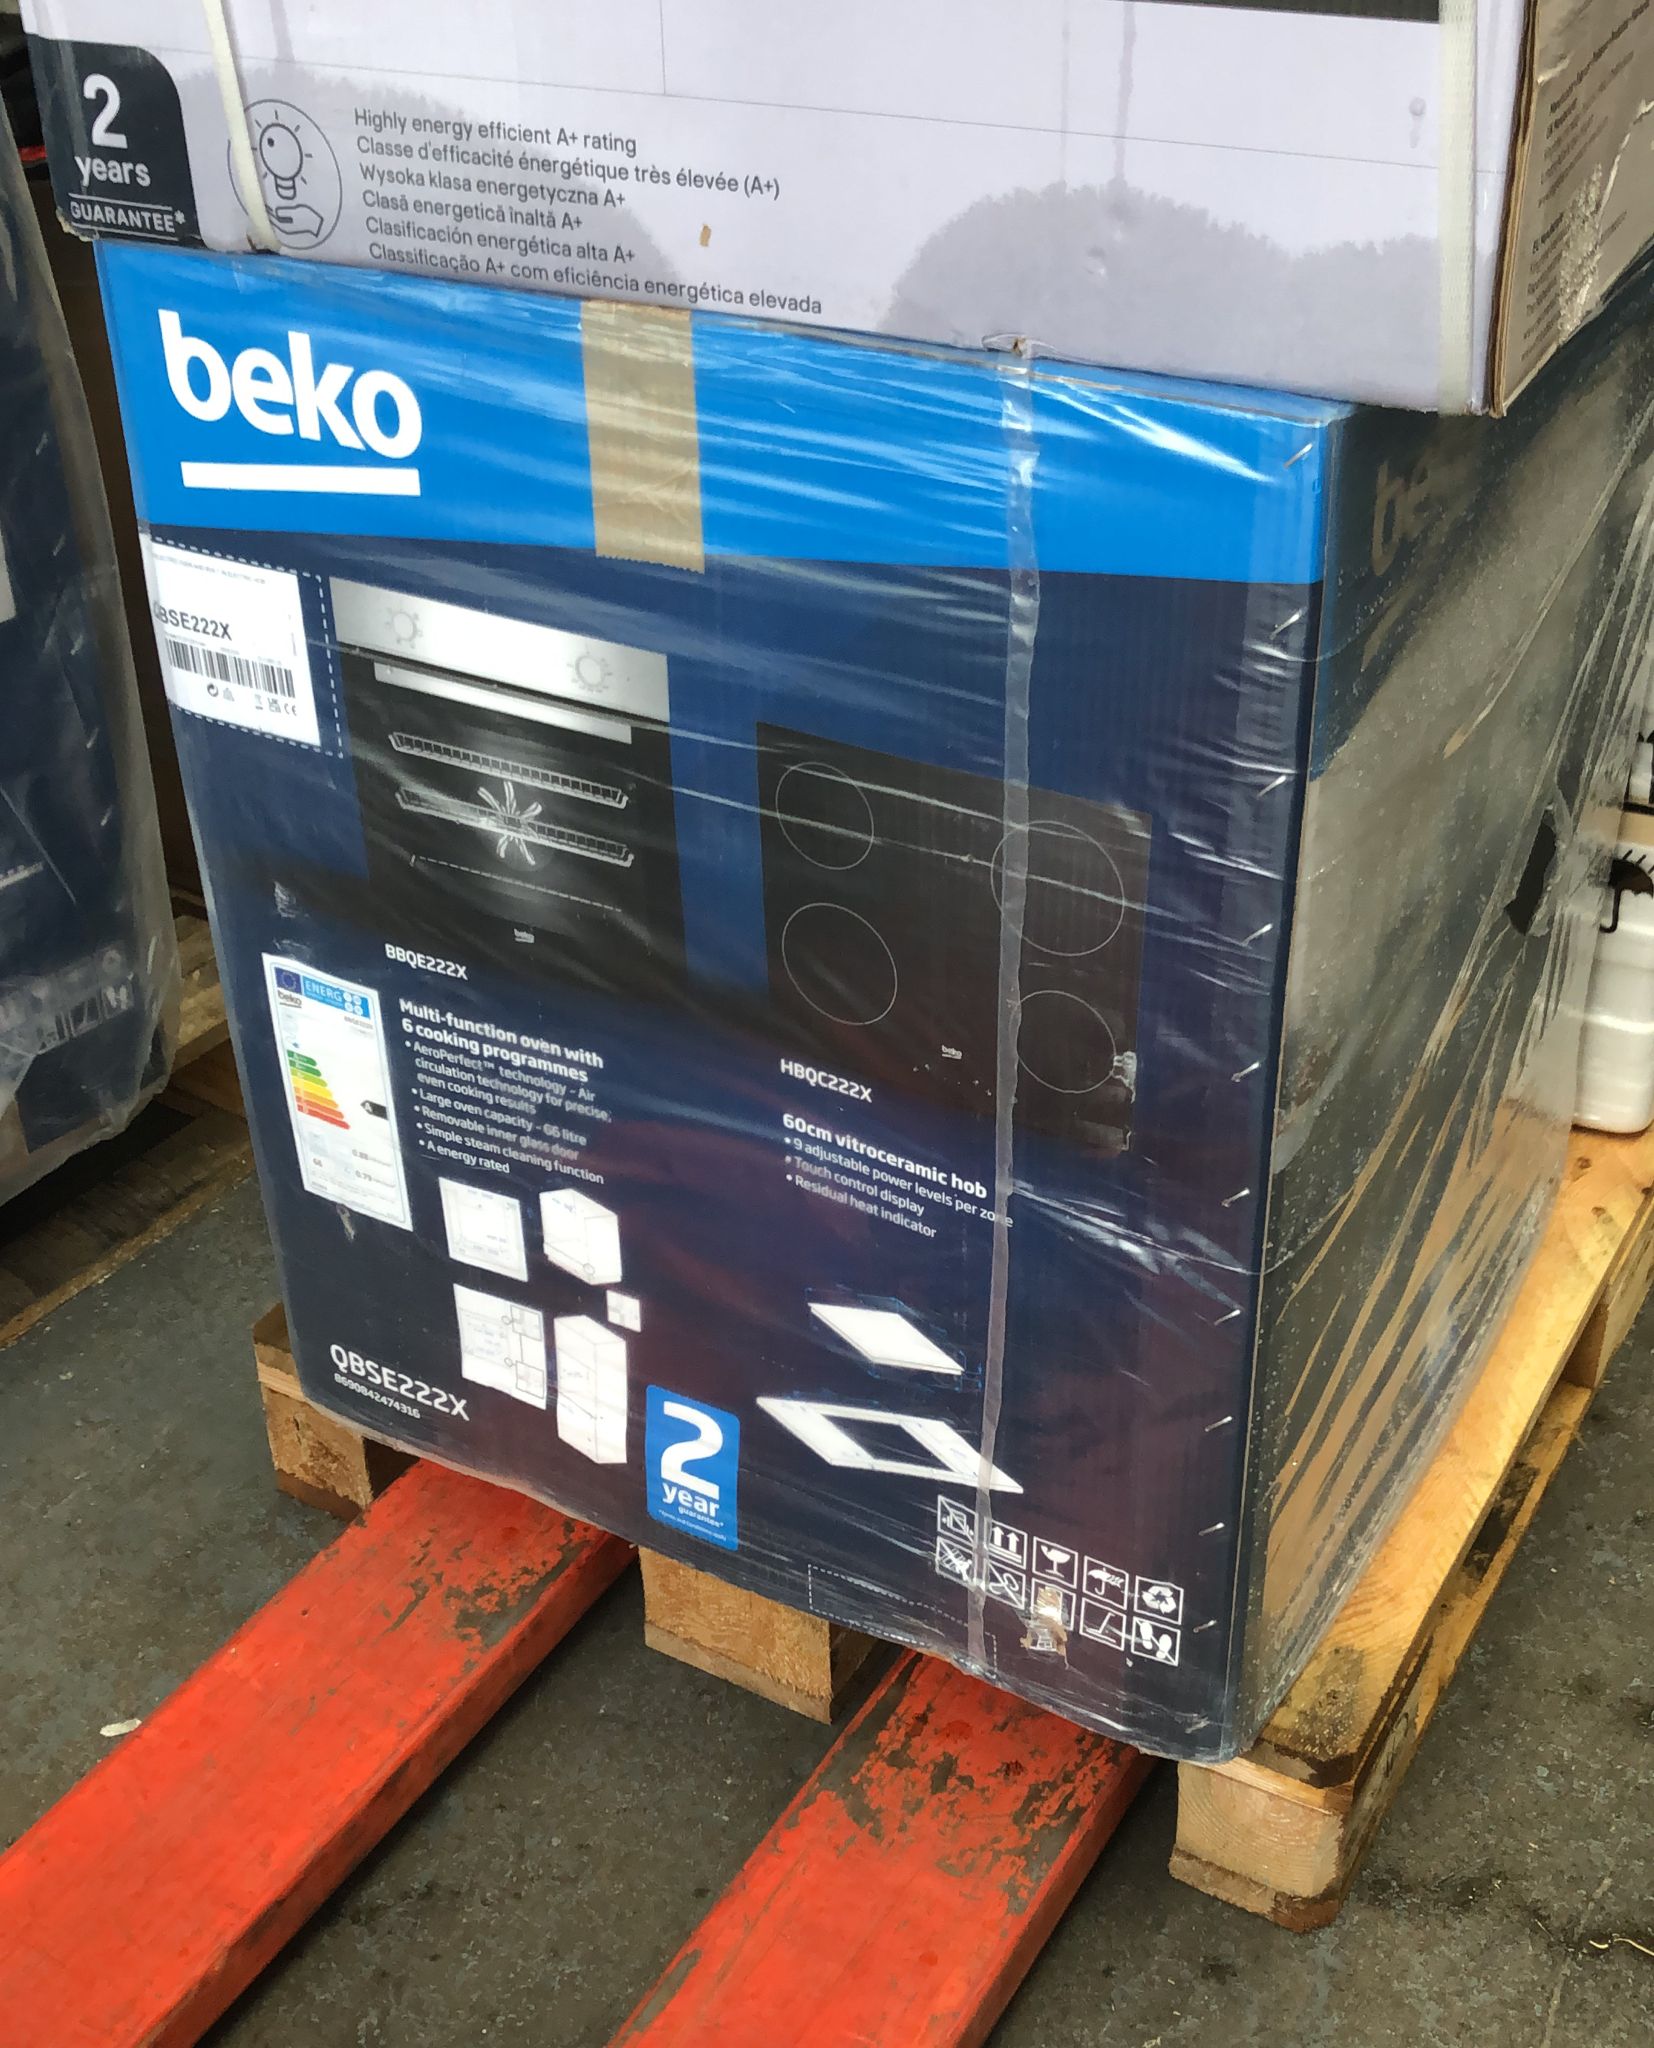 Beko-Multifunction Oven-Stainless steel-Built-in-QBSE222X-  4346